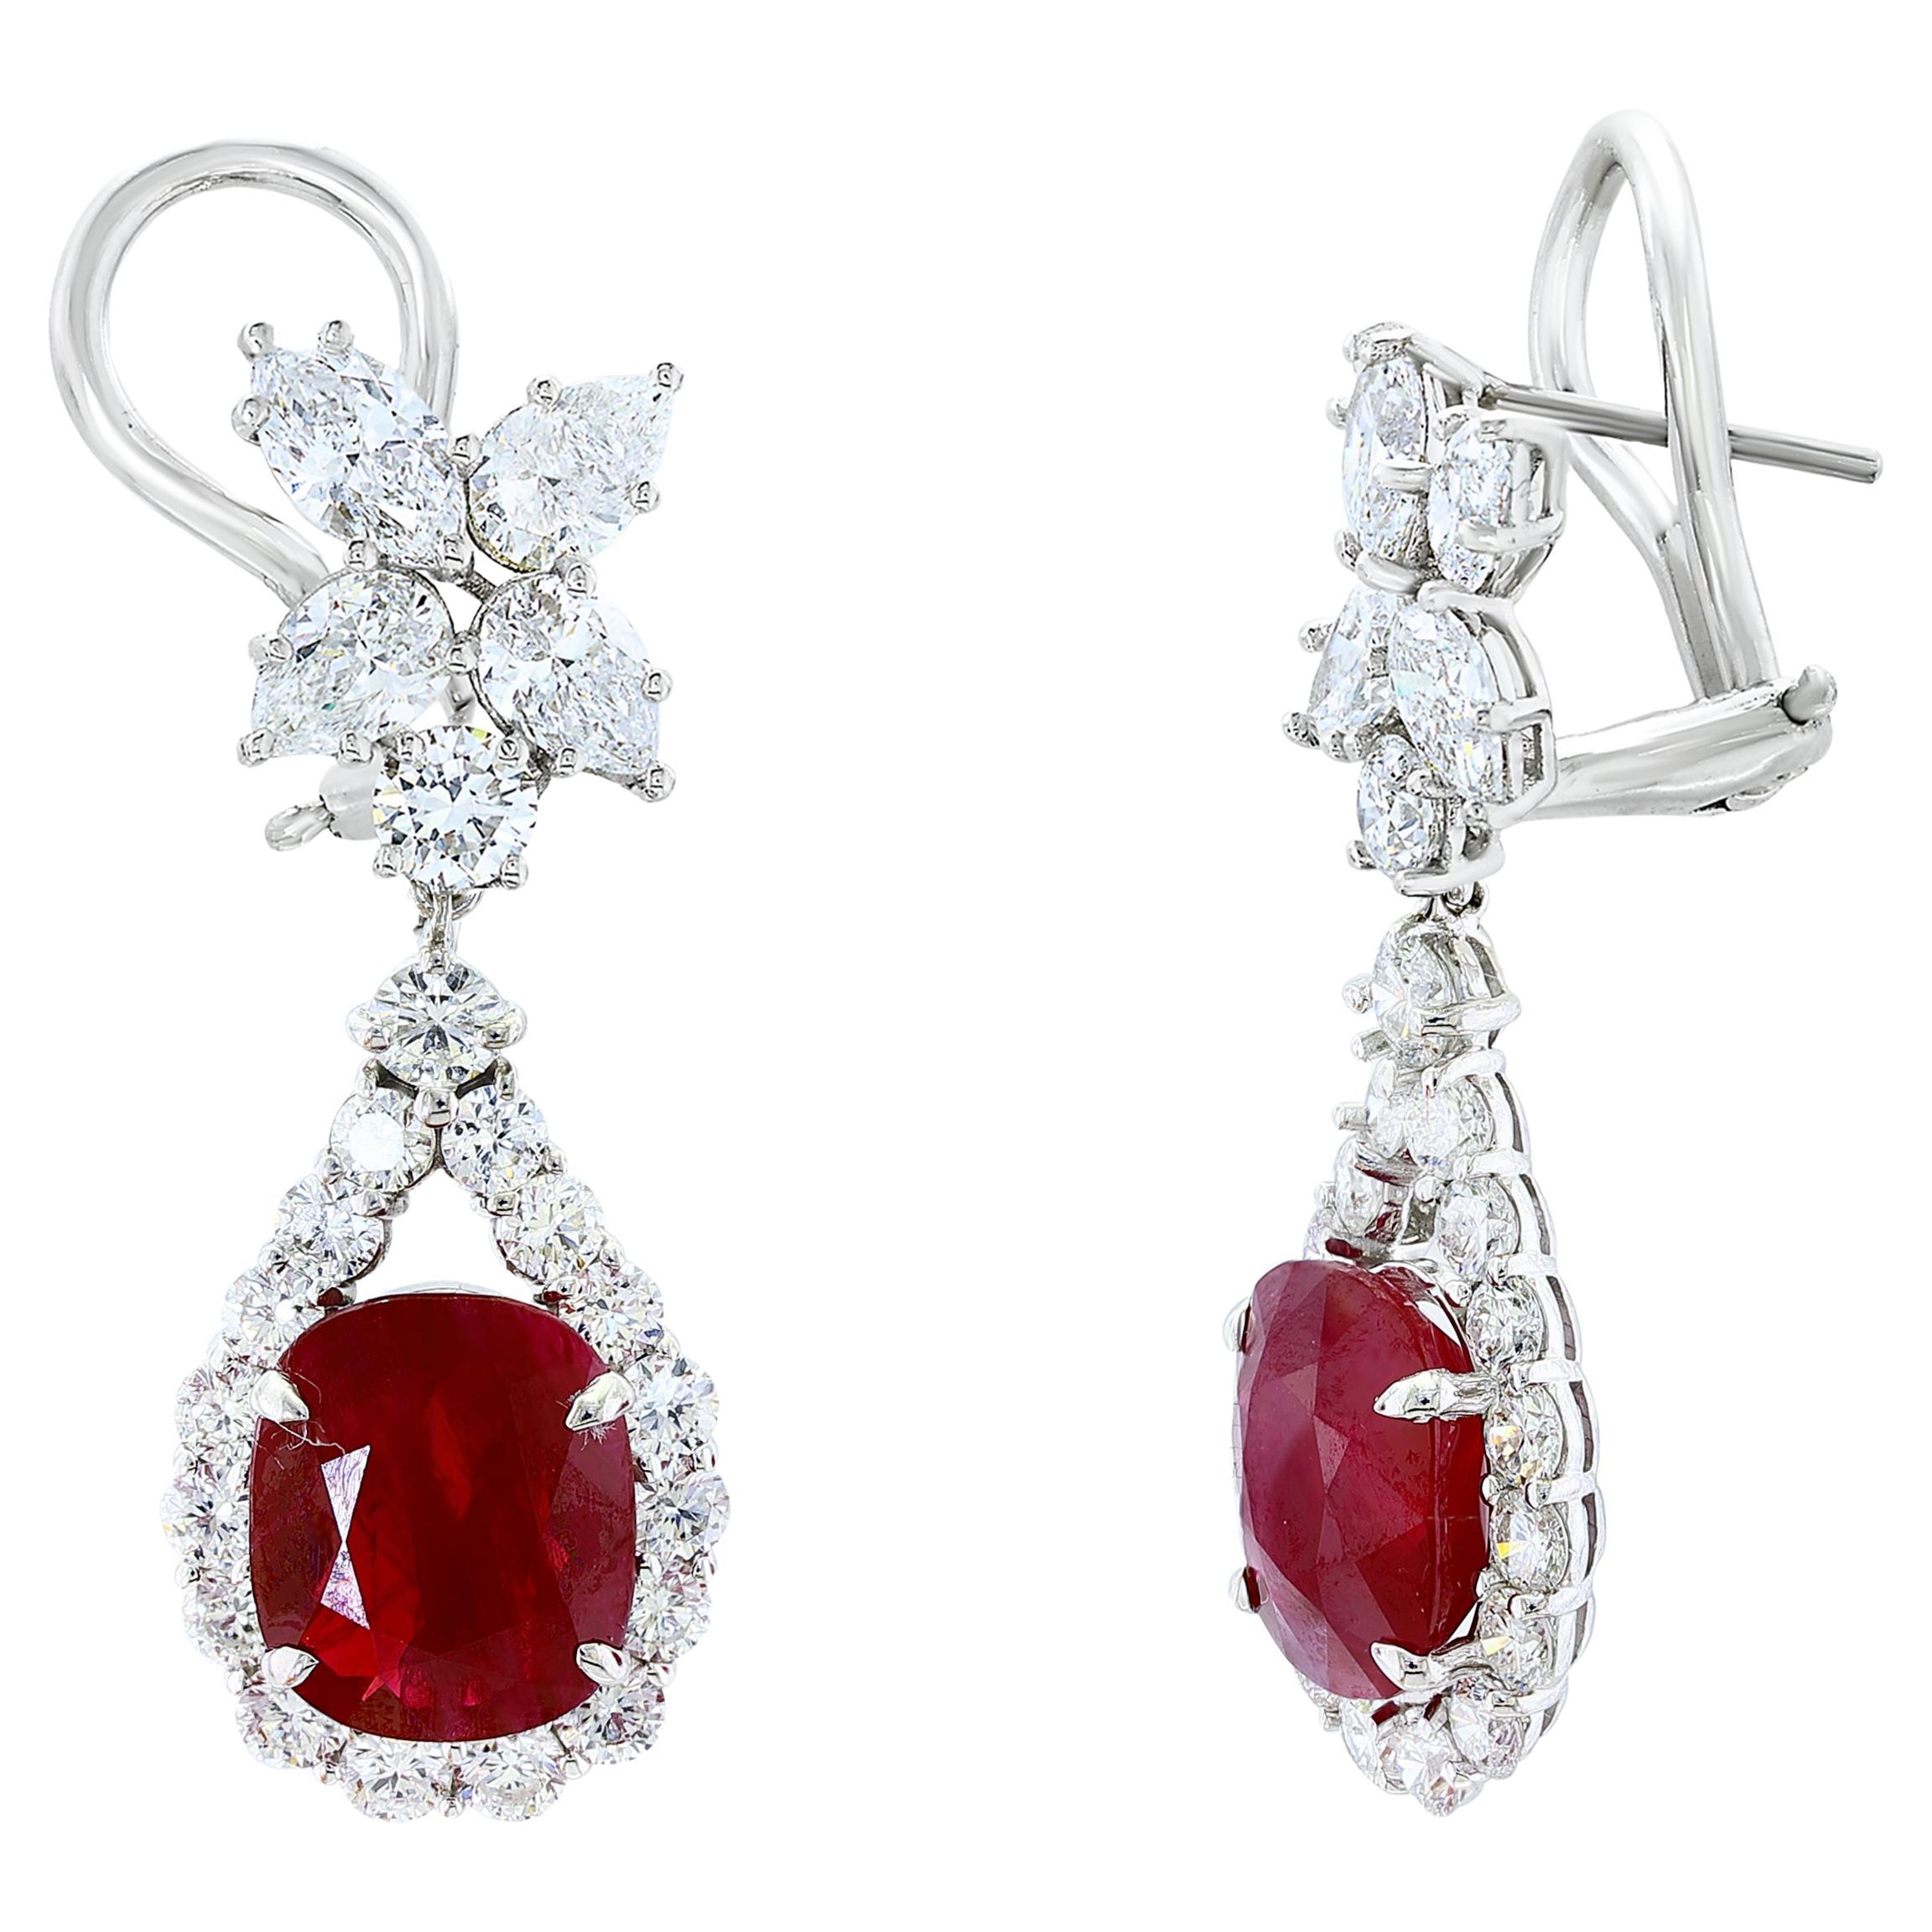 Certified 10.18 Carat Burma Ruby and Diamond Drop Earrings in 18K White Gold For Sale